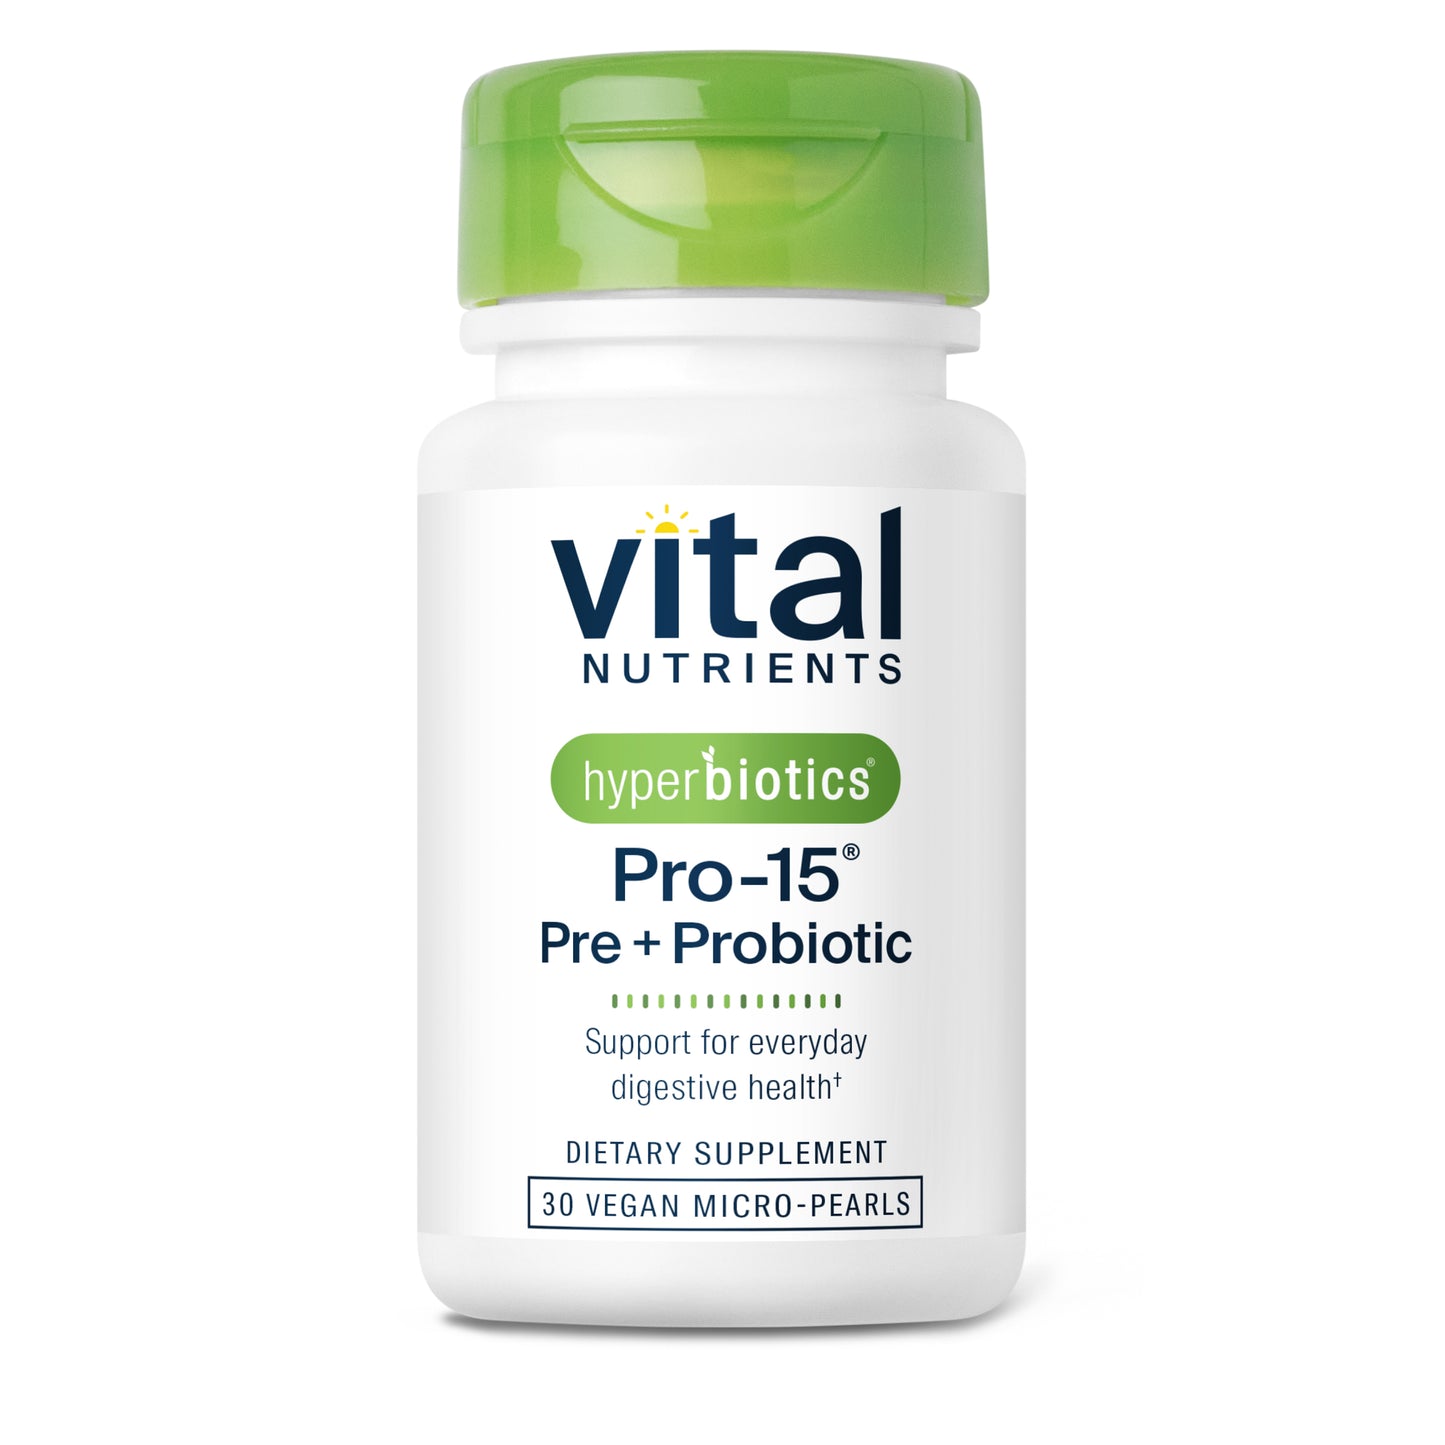 Hyperbiotics Pro-15 Pre+Probiotic 30 vegan micro-pearls.